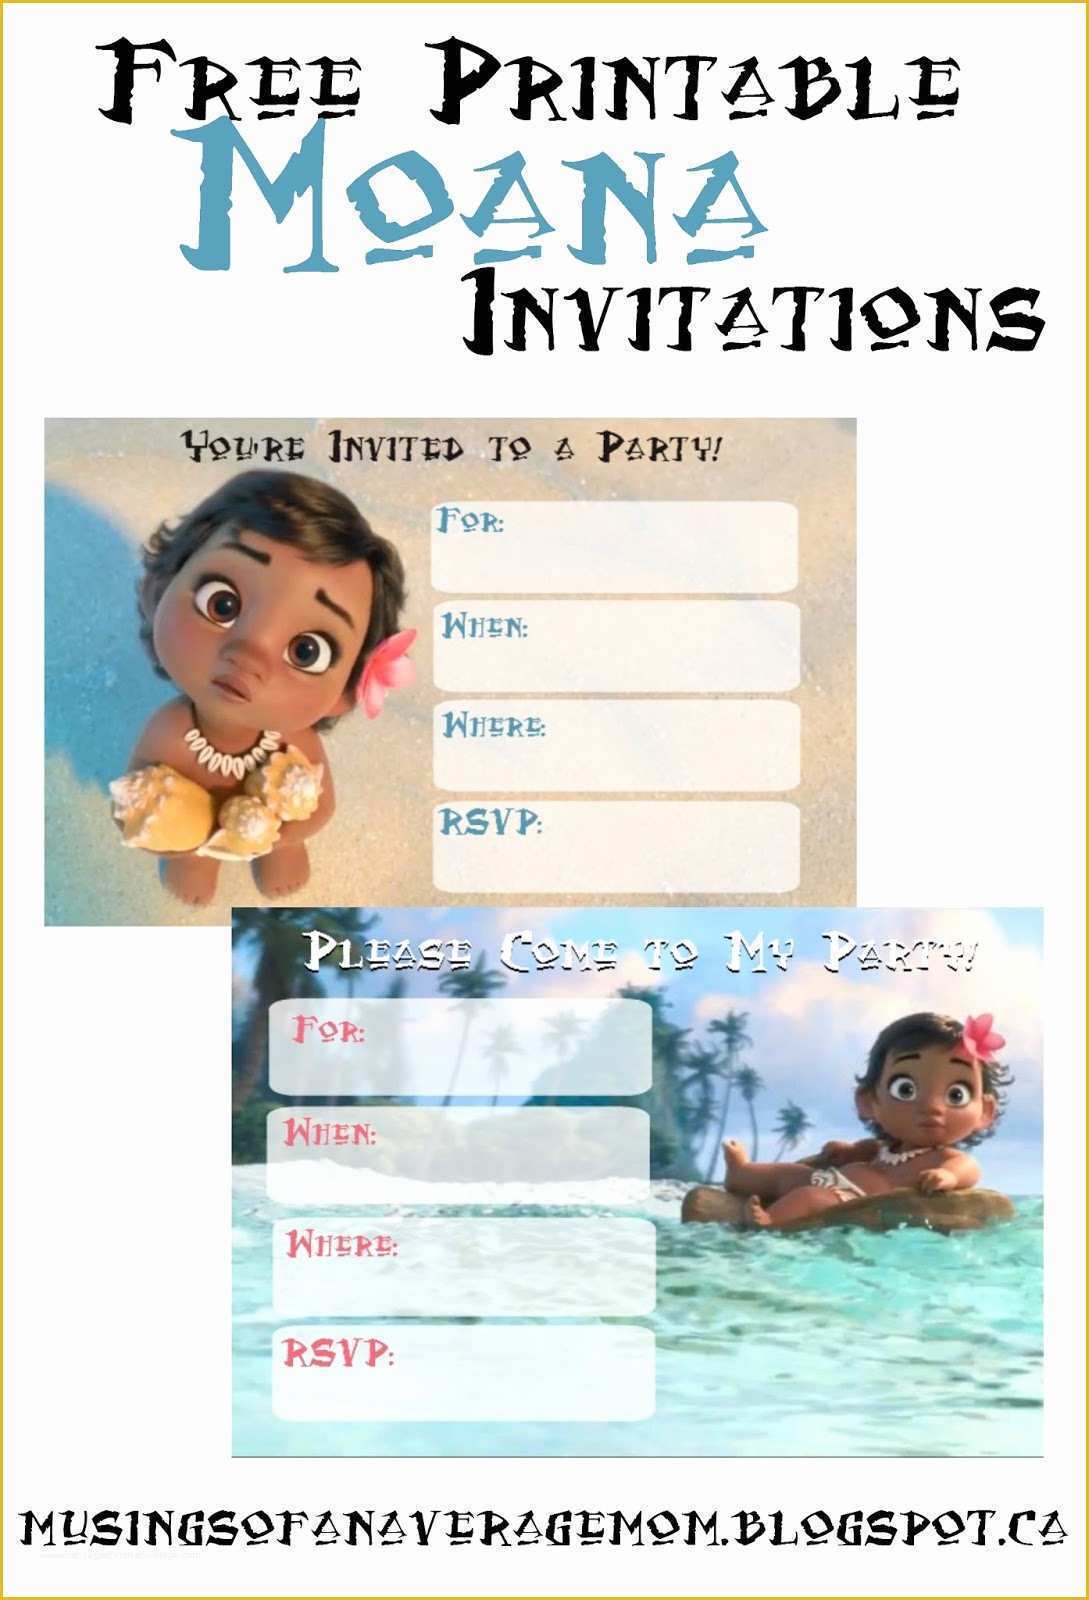 Baby Moana Invitation Template Free Of Musings Of An Average Mom Free Printable Moana Invitations